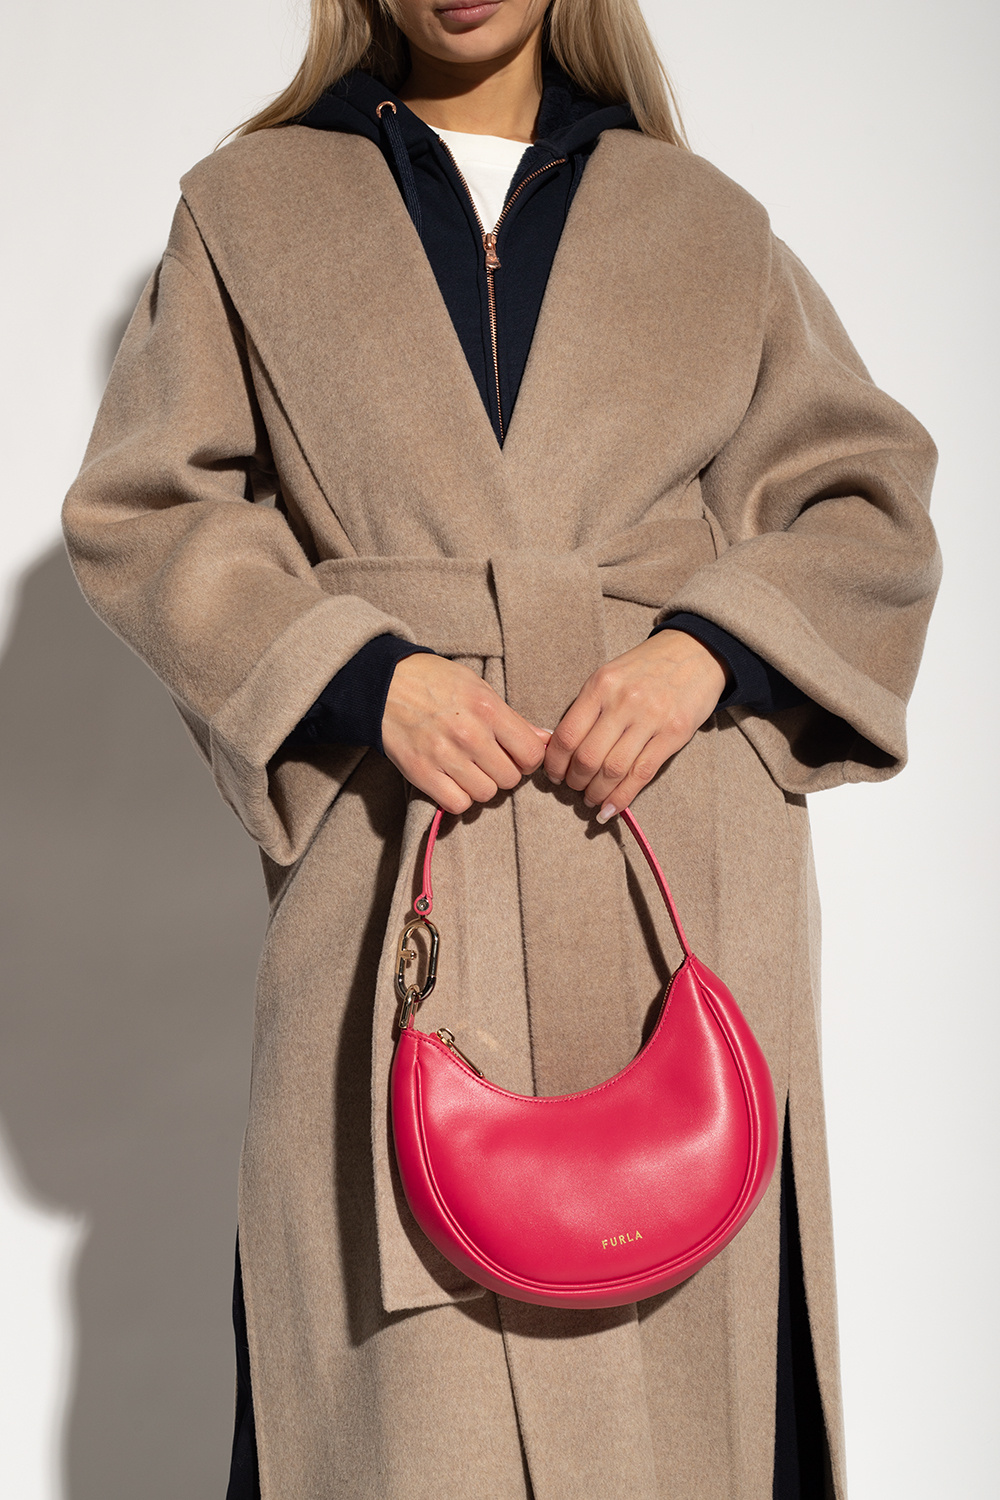 FURLA FURLA PRIMAVERA S SHOULDER BAG, Light grey Women's Handbag